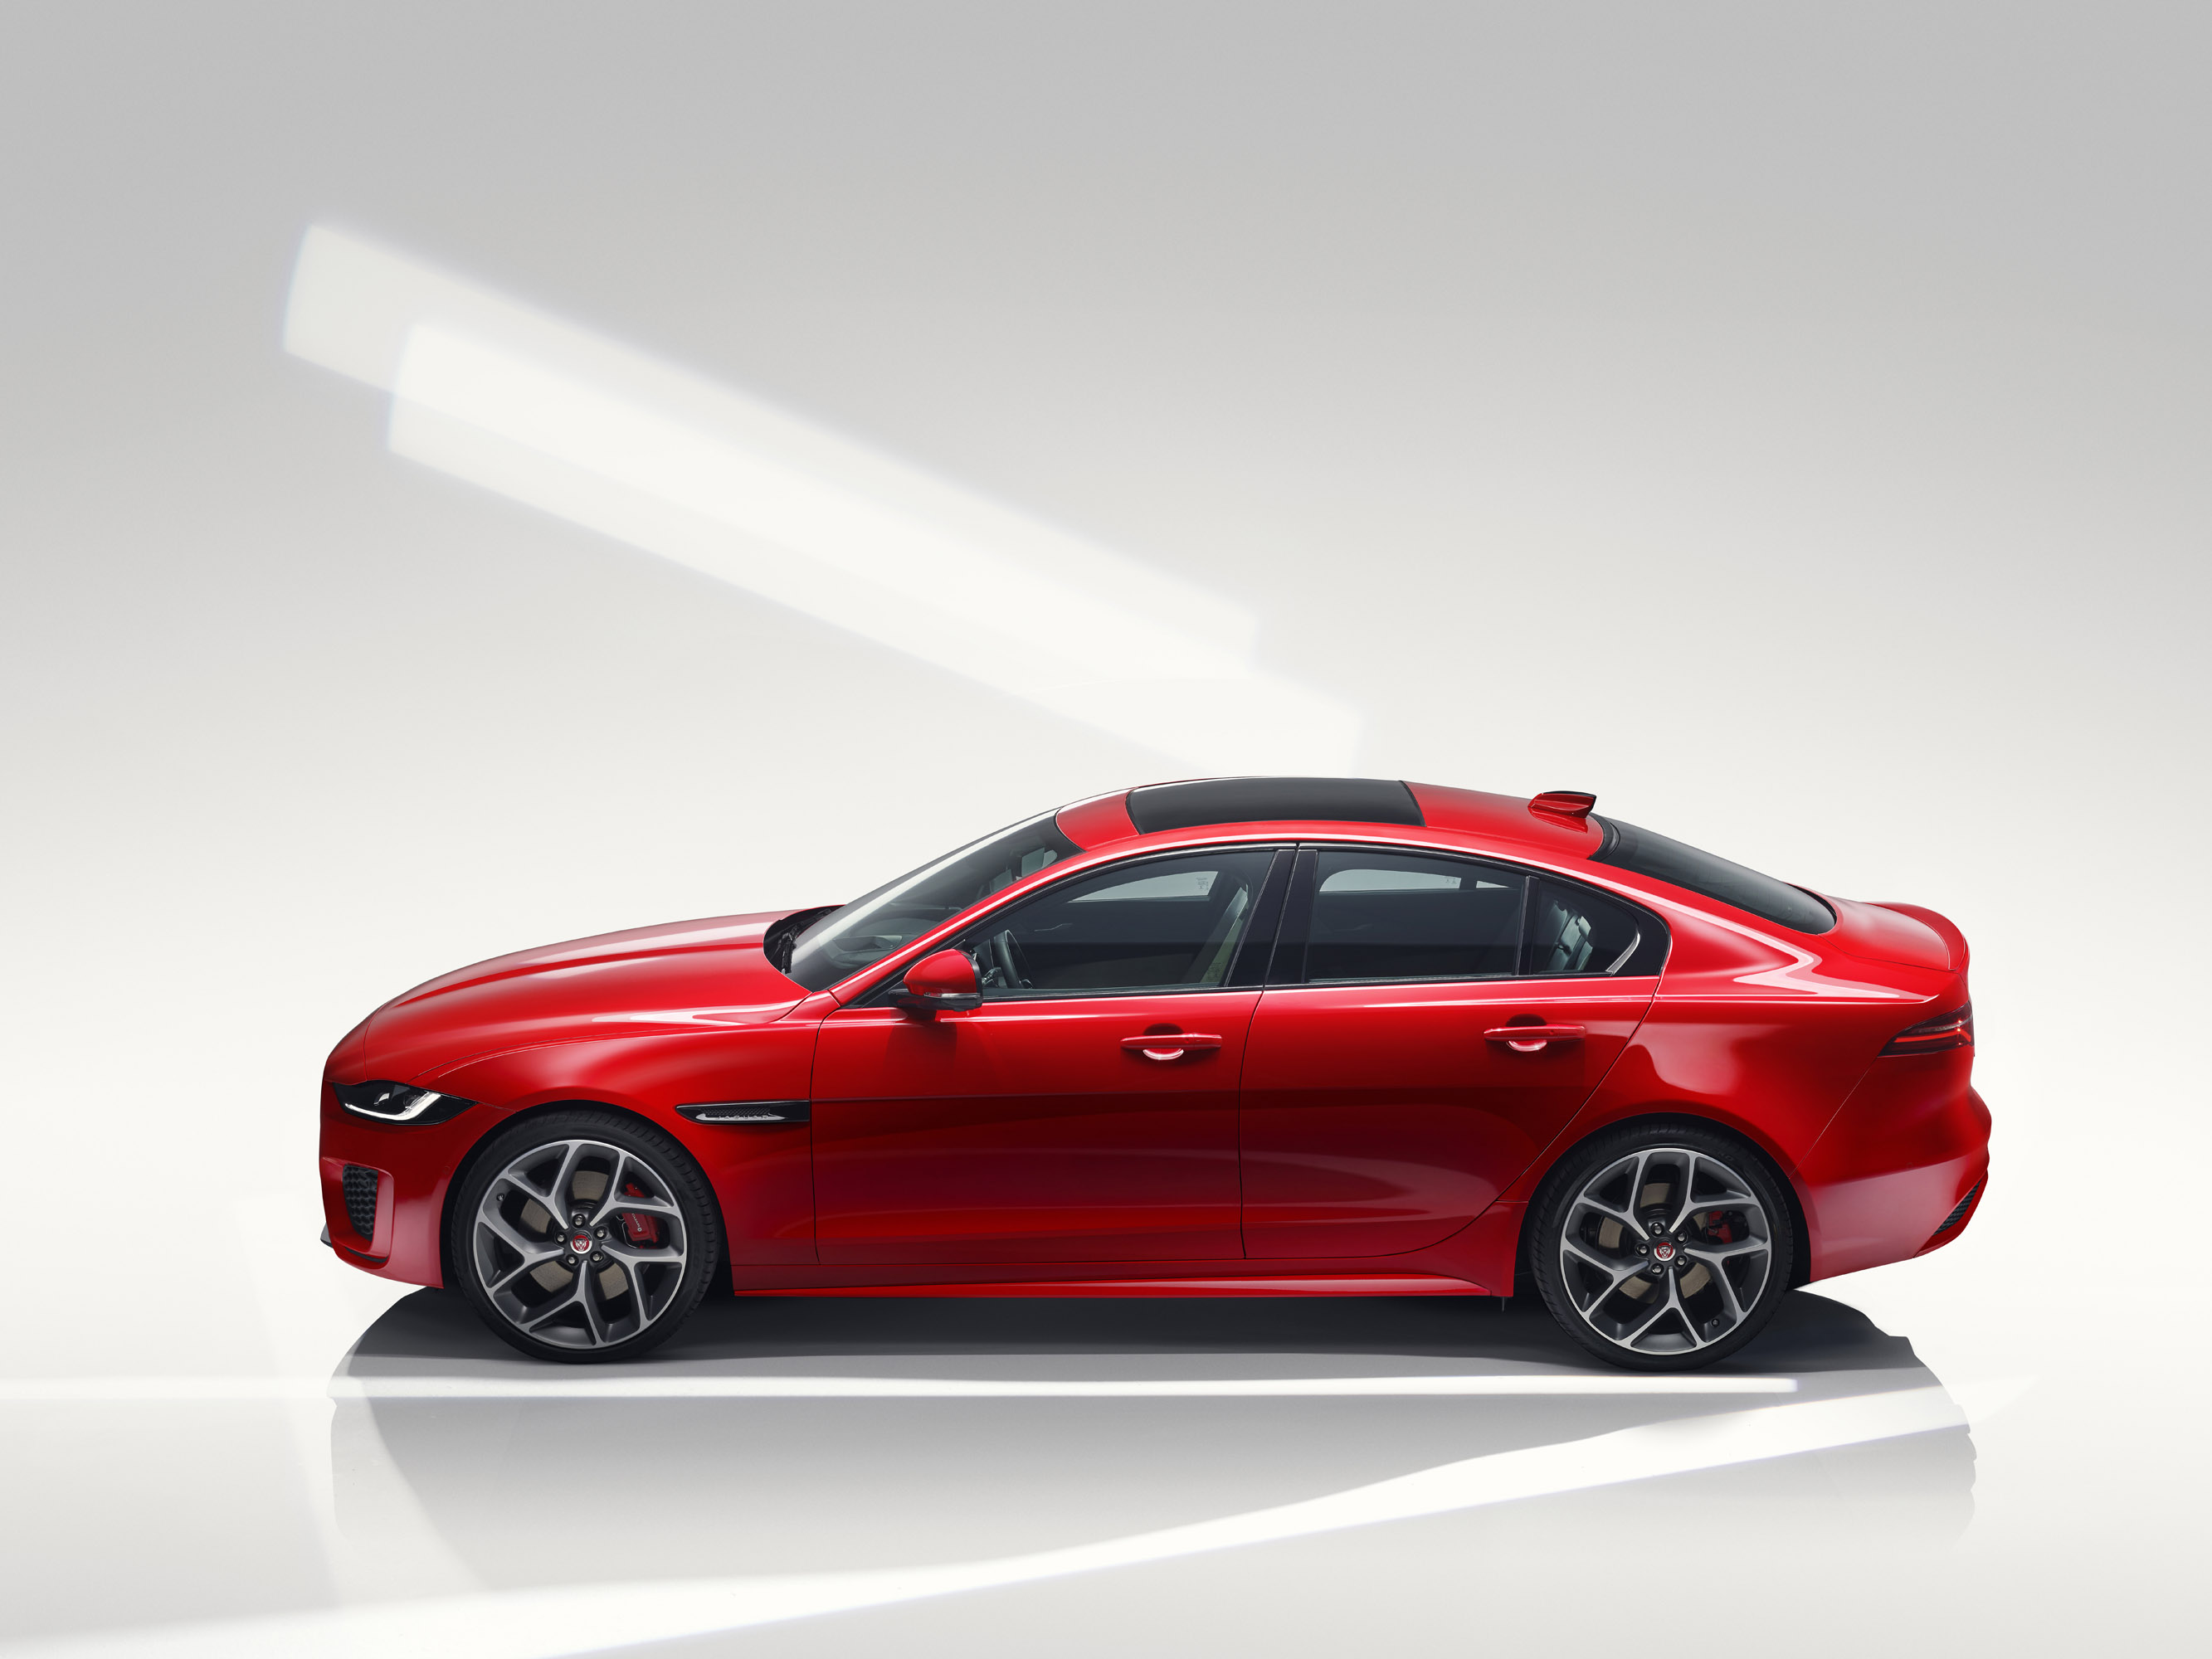 Jaguar unveils 2020 XE Sport Sedan model